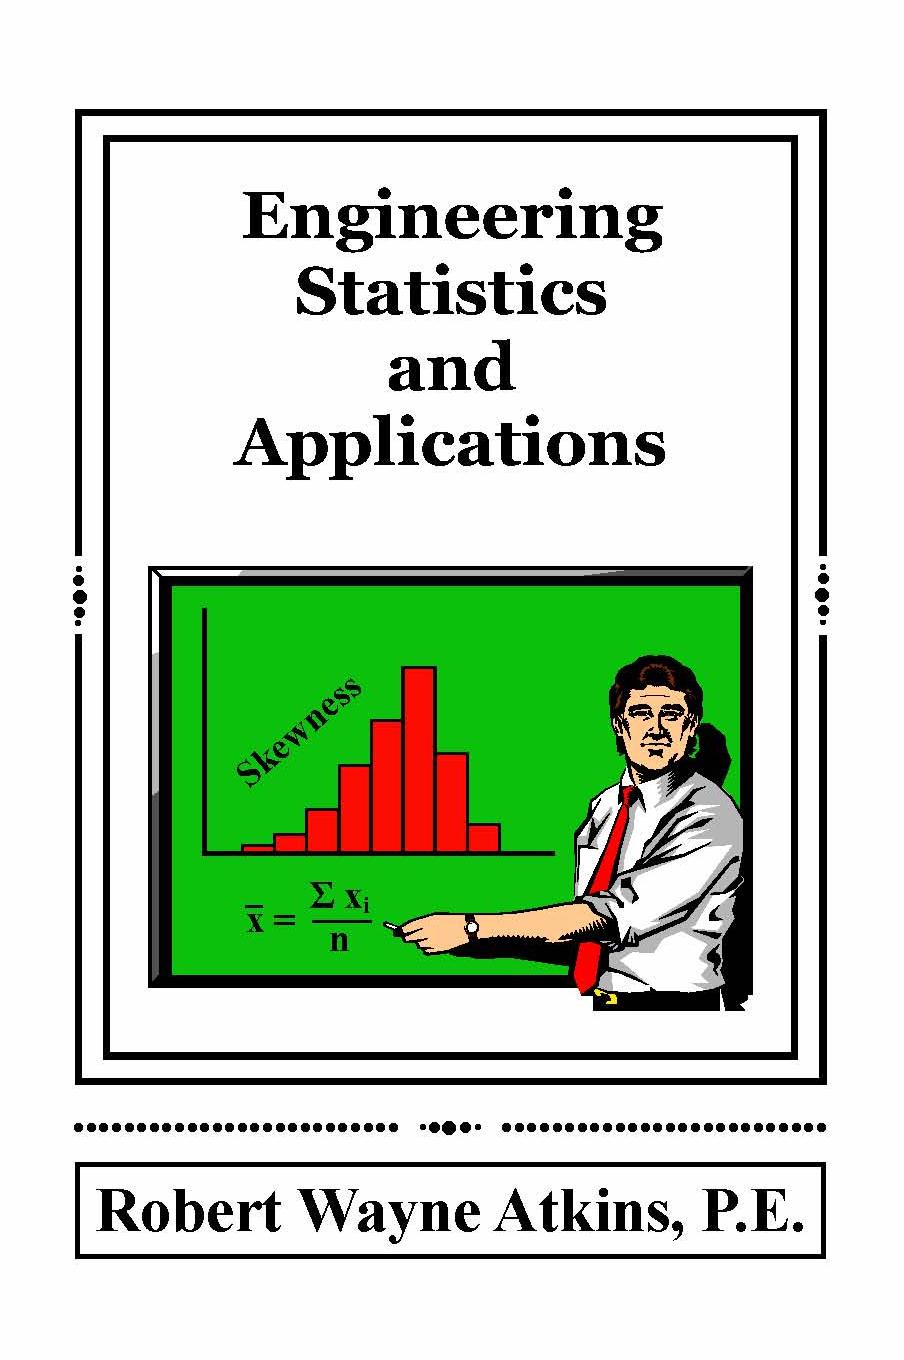 Engineering Statistics